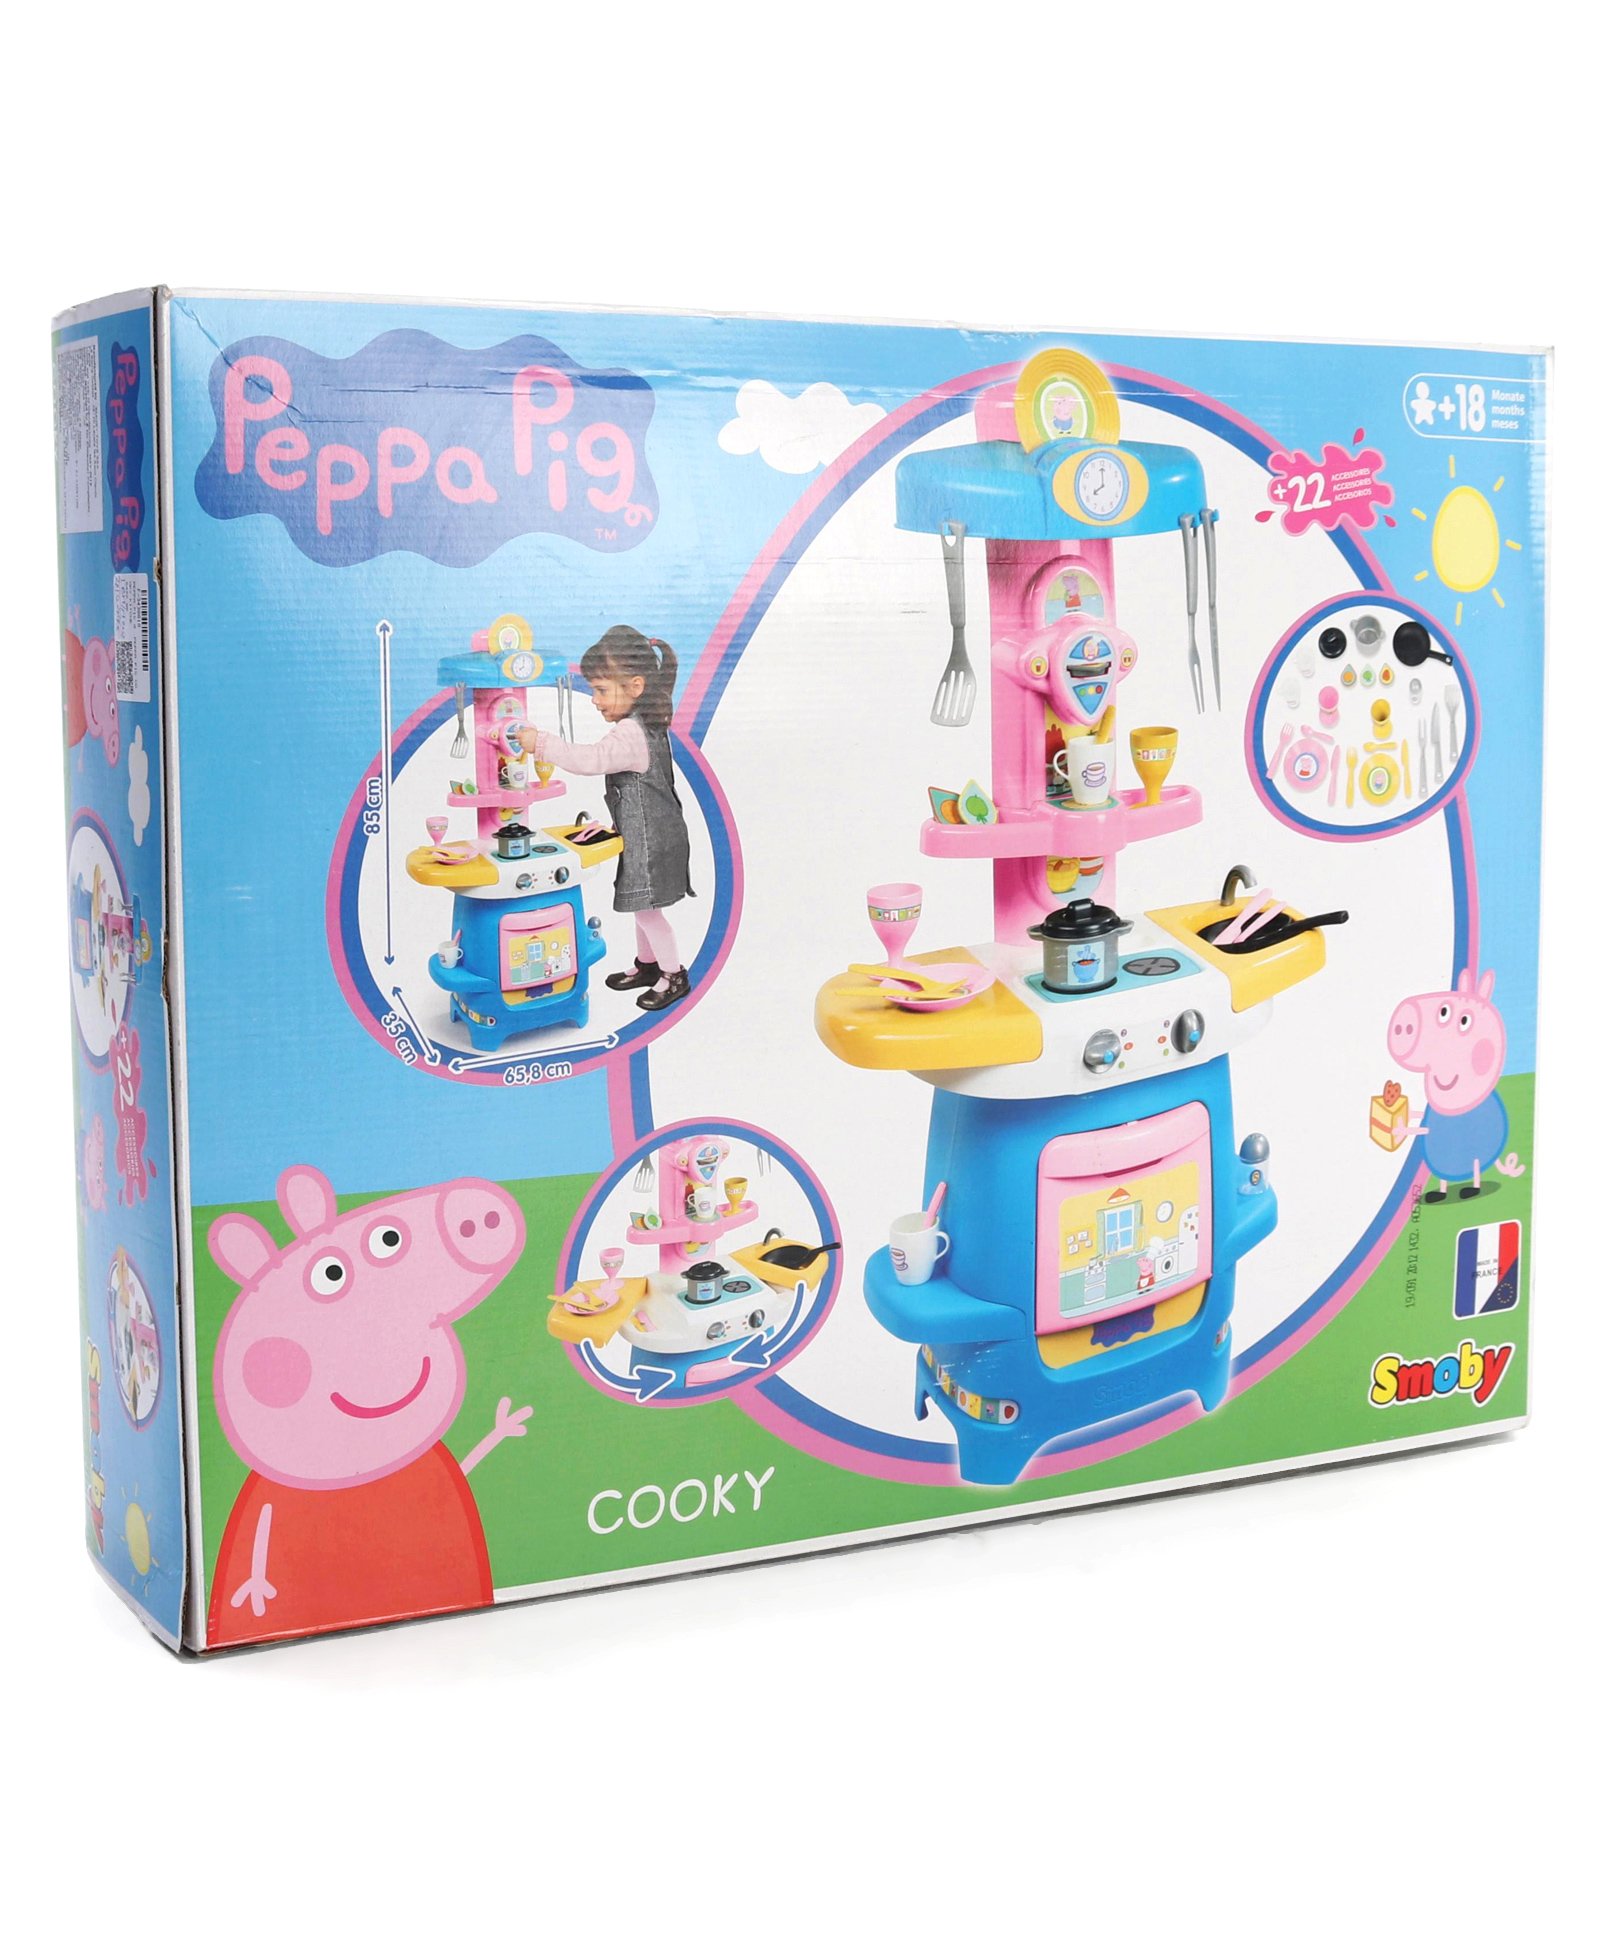 peppa pig toys in hindi